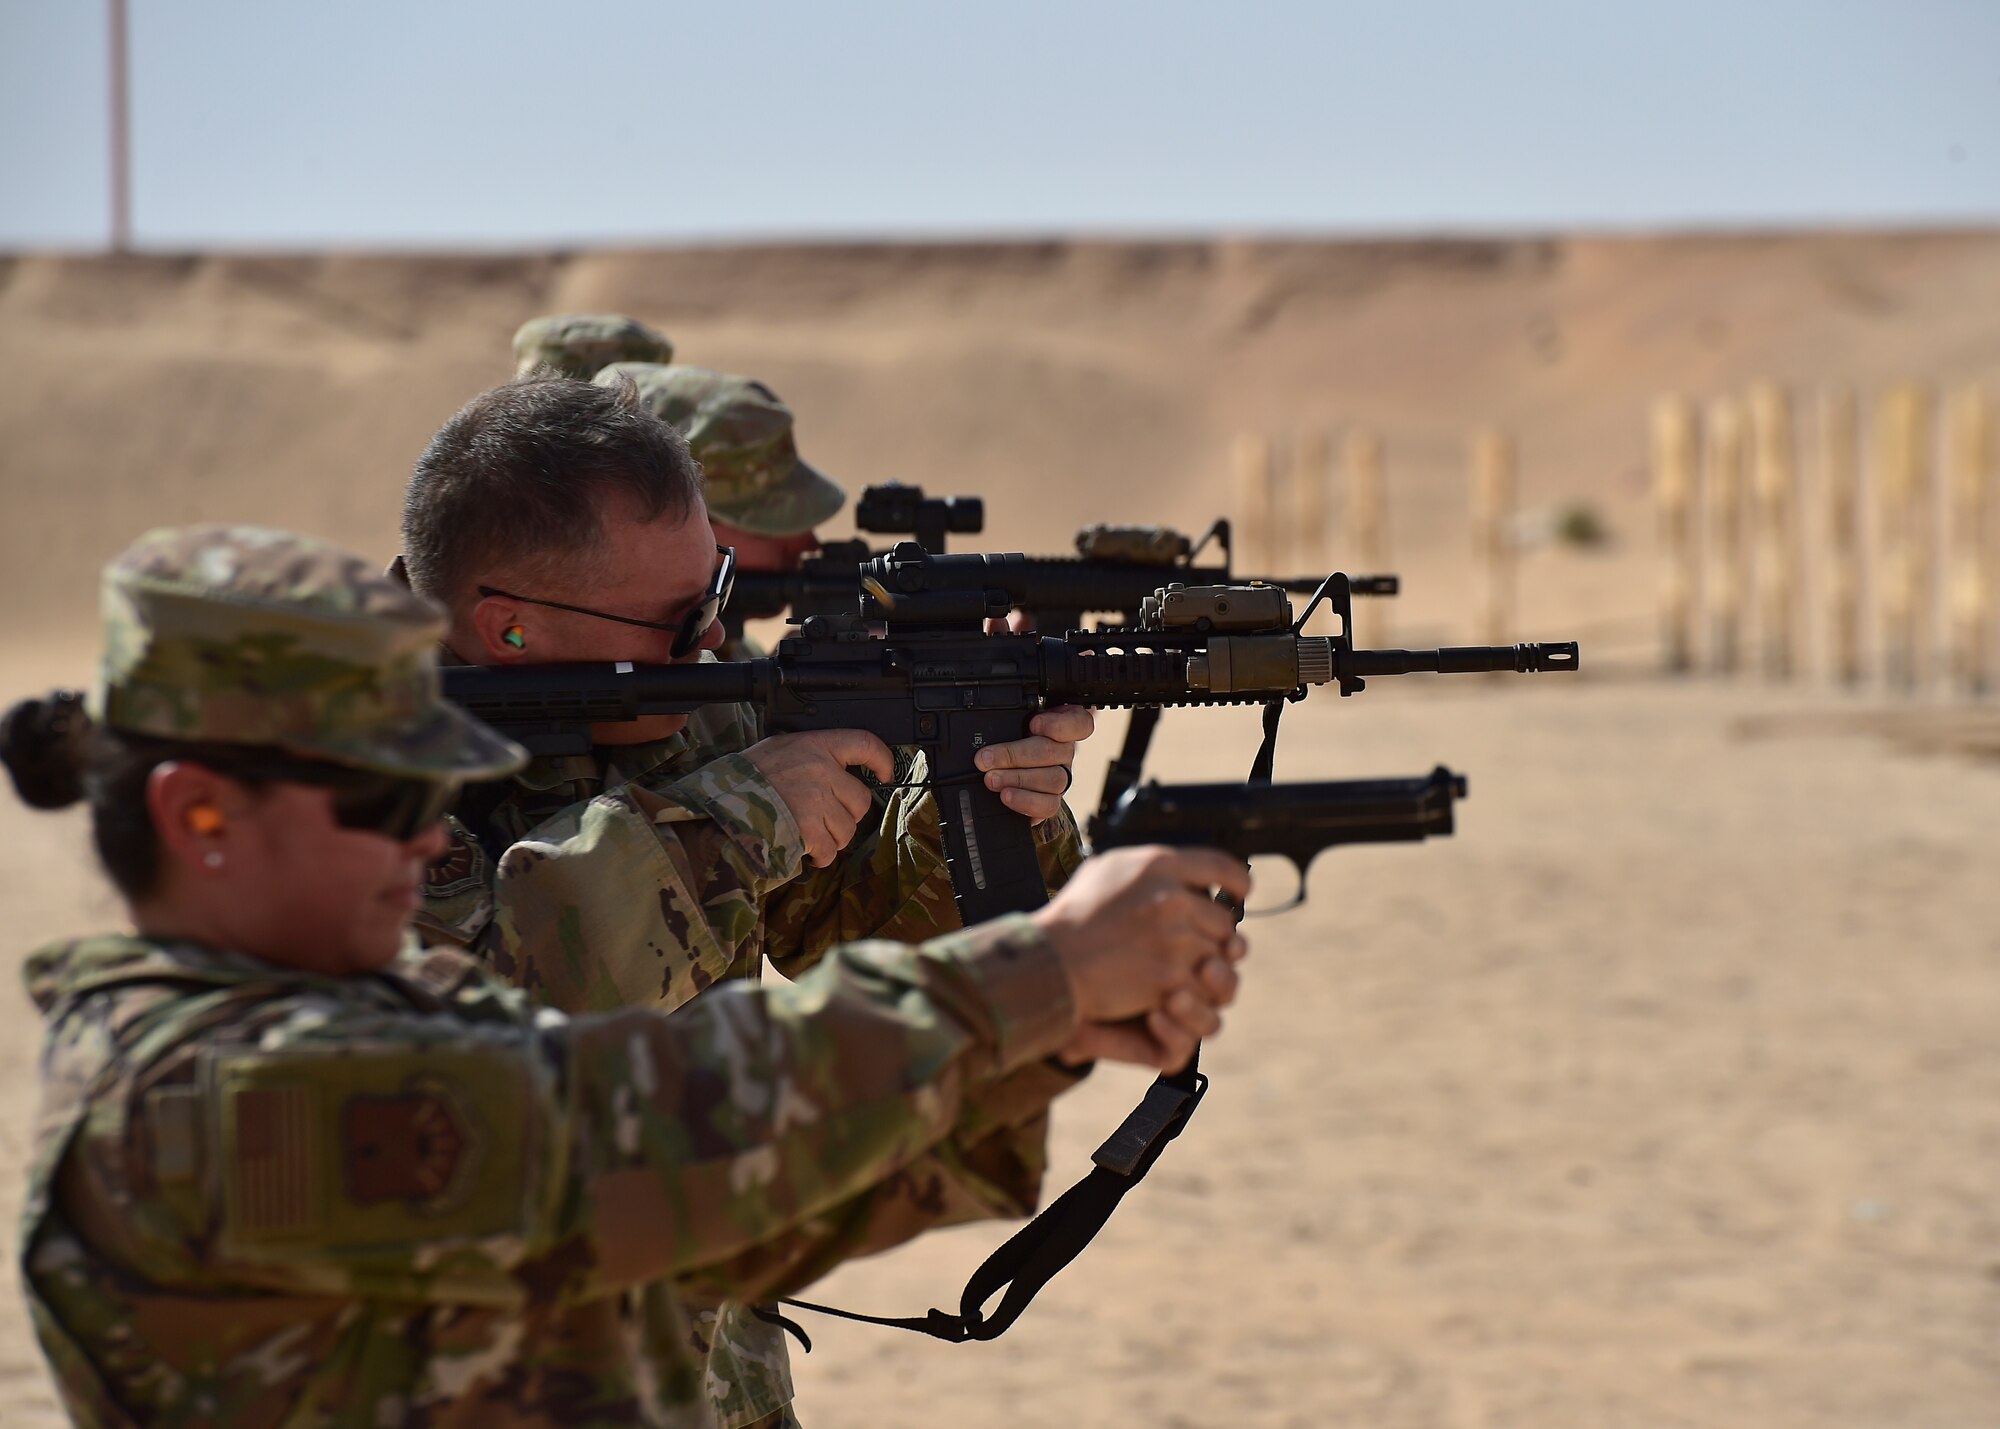 378 AEW leadership visit security forces down range